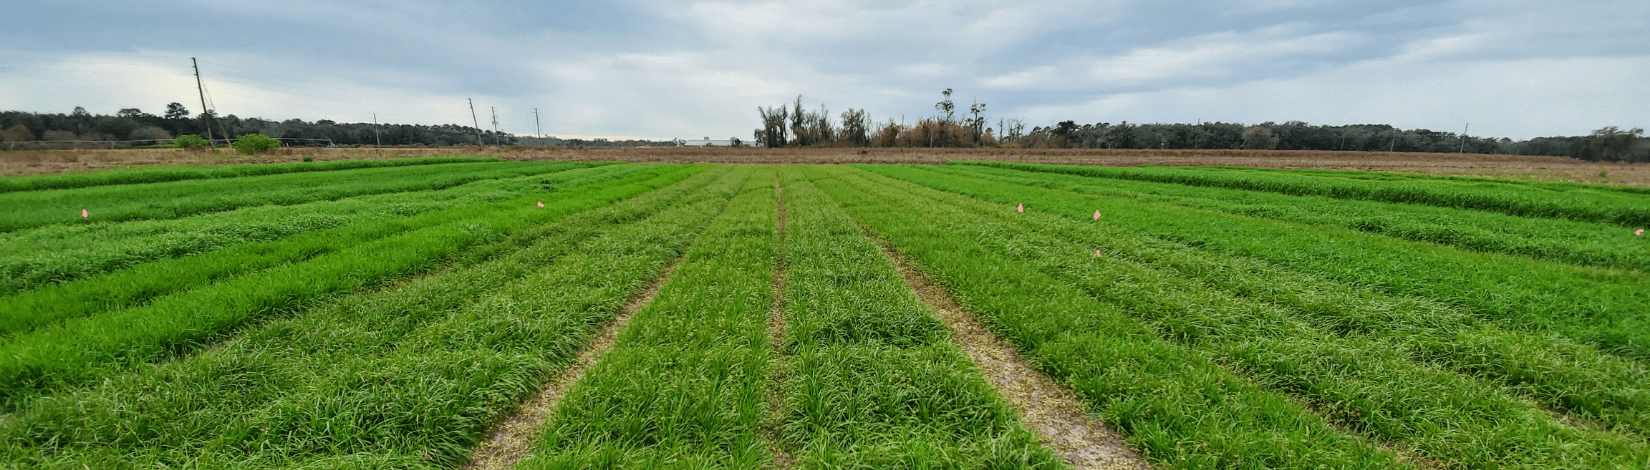 A green field